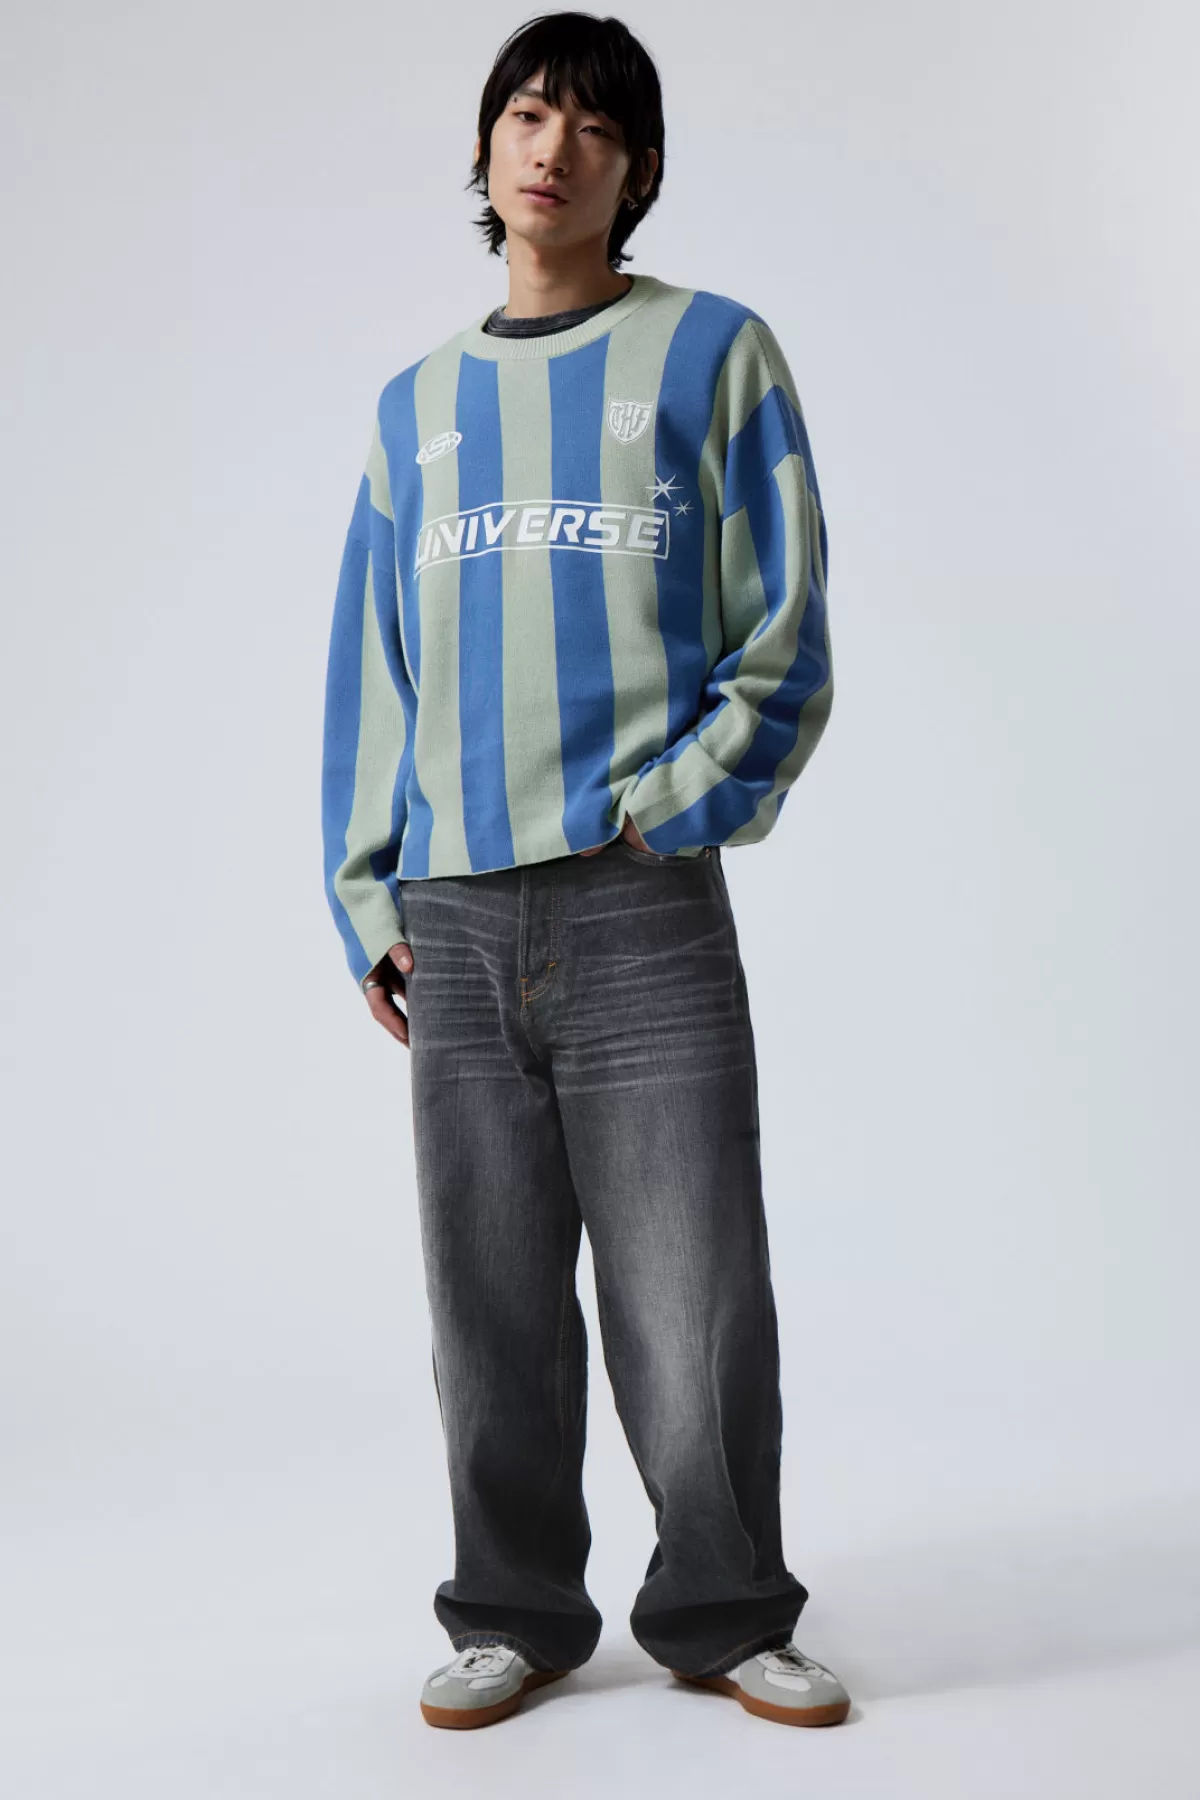 Weekday Loose Soccer Team Knitted Sweater Green & Blue Stripe Best Sale